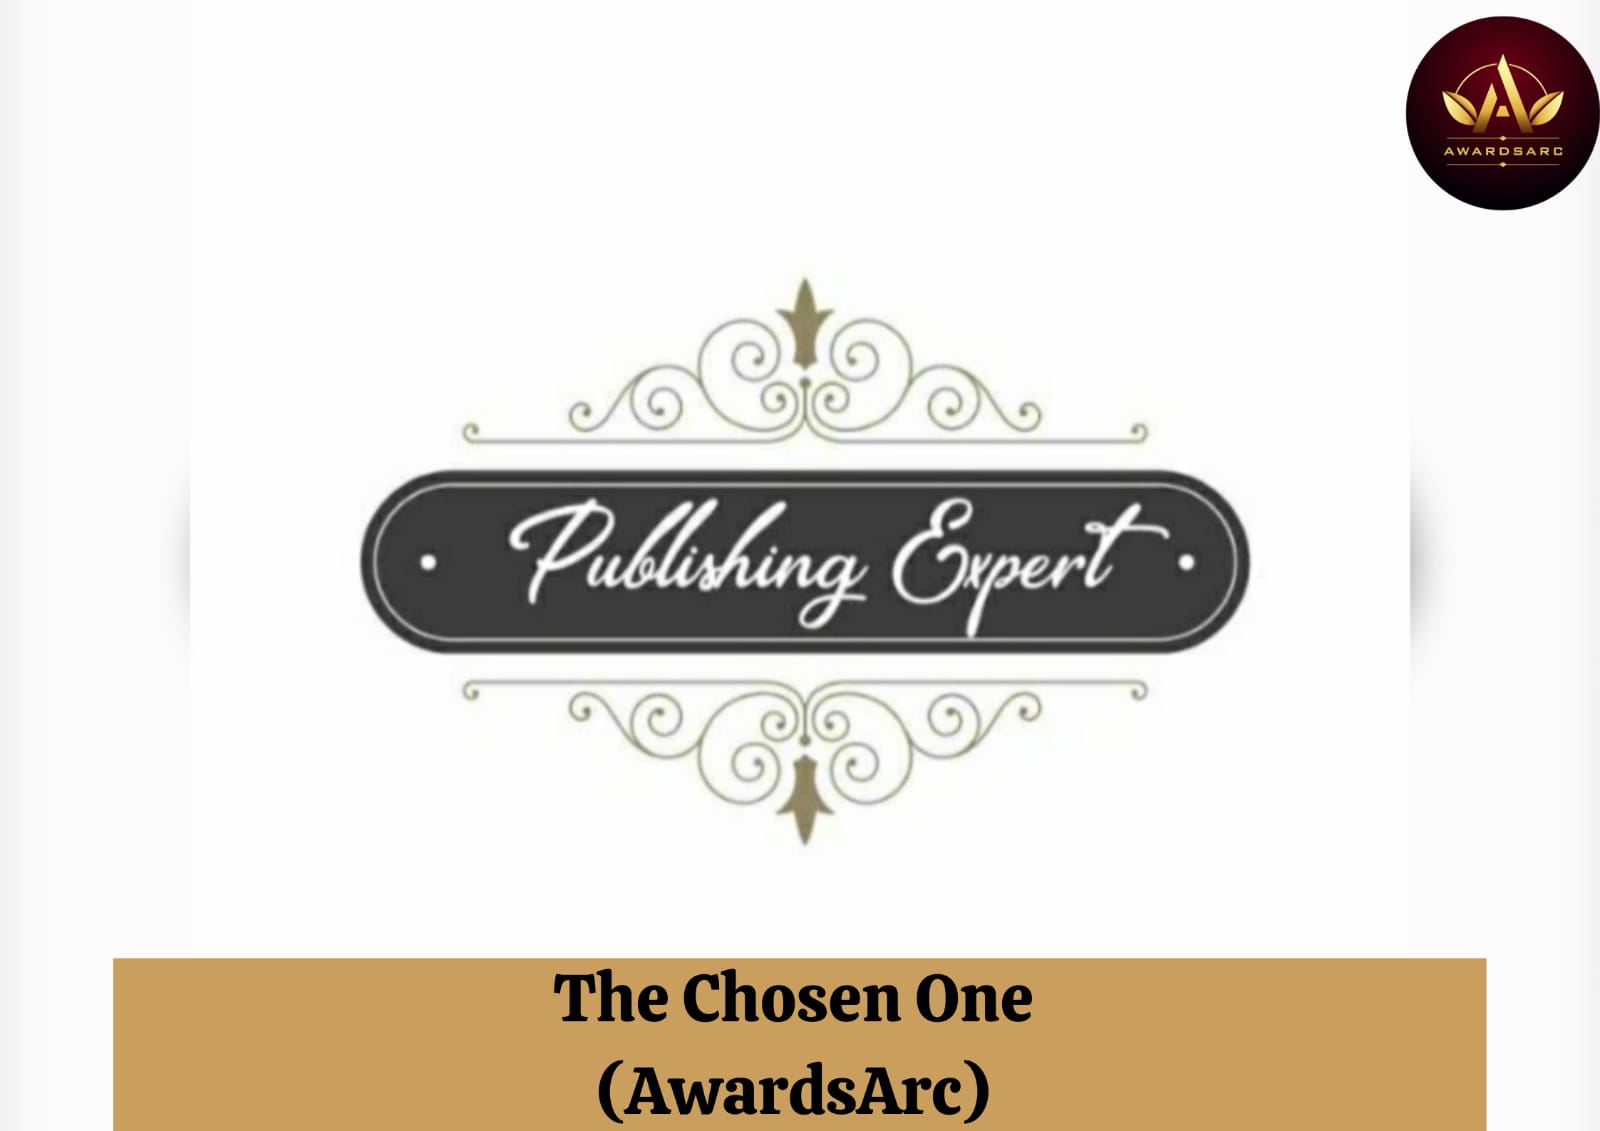 Publishing Experts Hardworking journey led them to be one of THE CHOSEN ONES by AwardsArc.